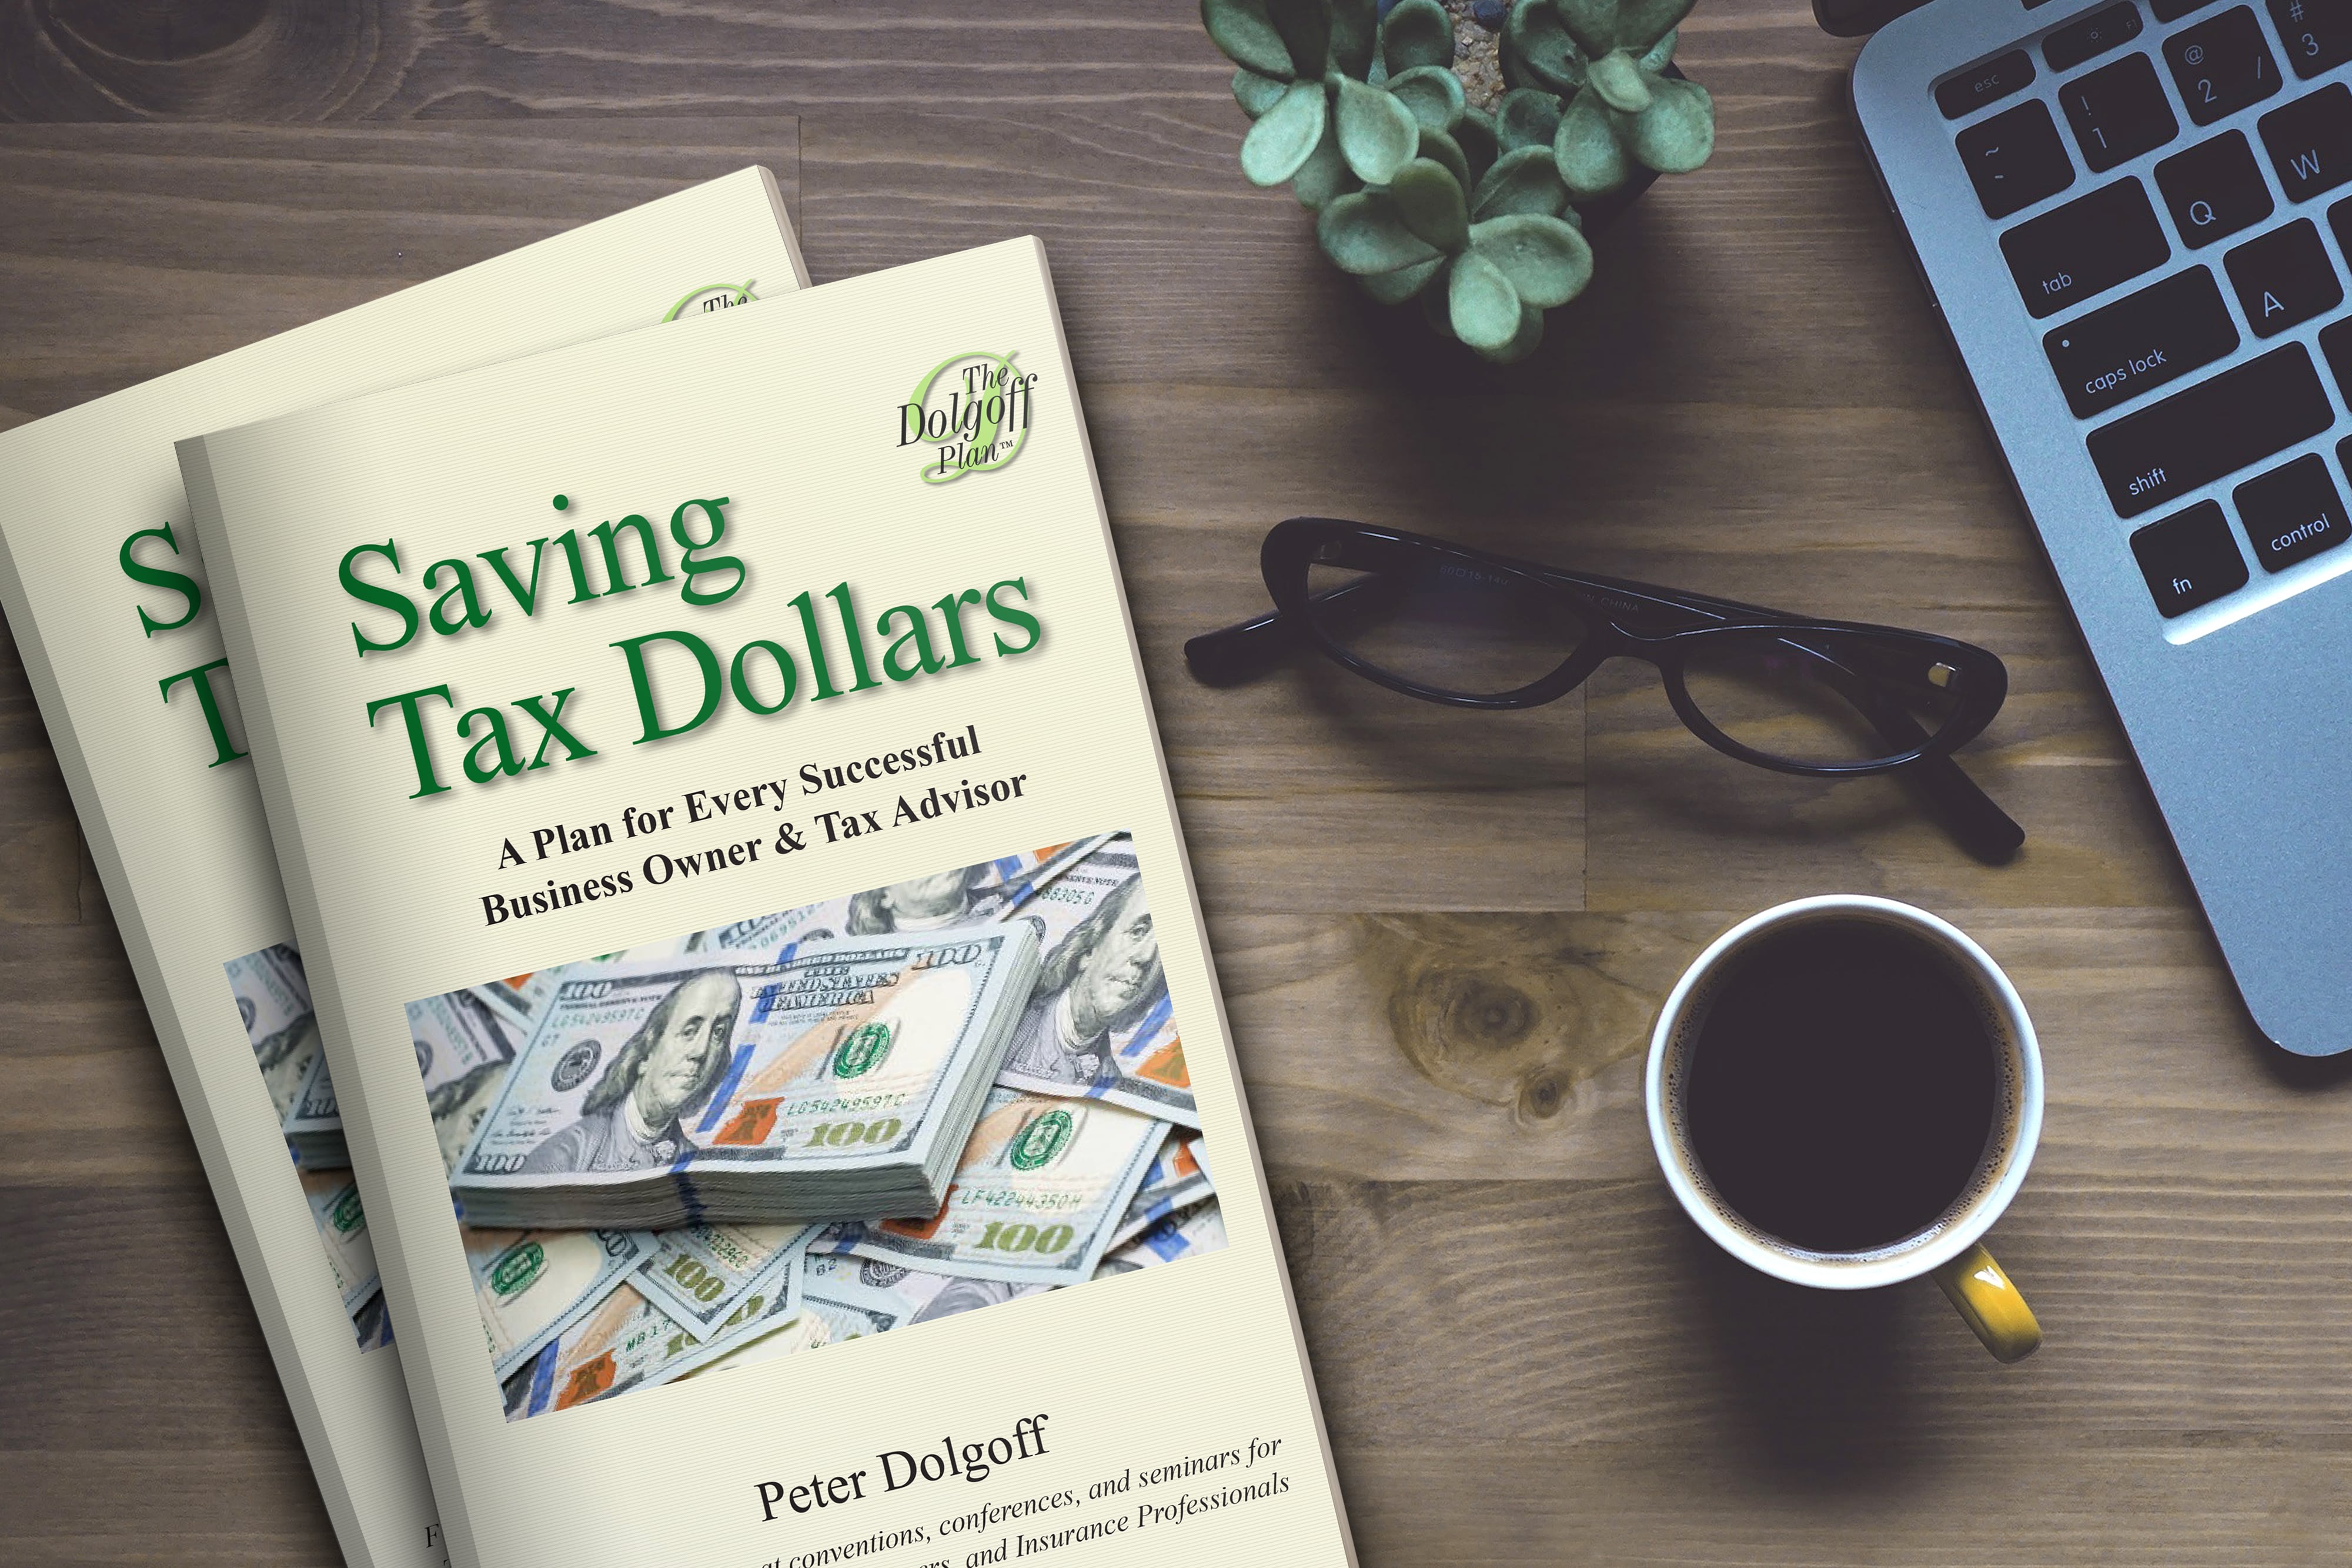 New Book Available on Amazon - Saving Tax Dollars